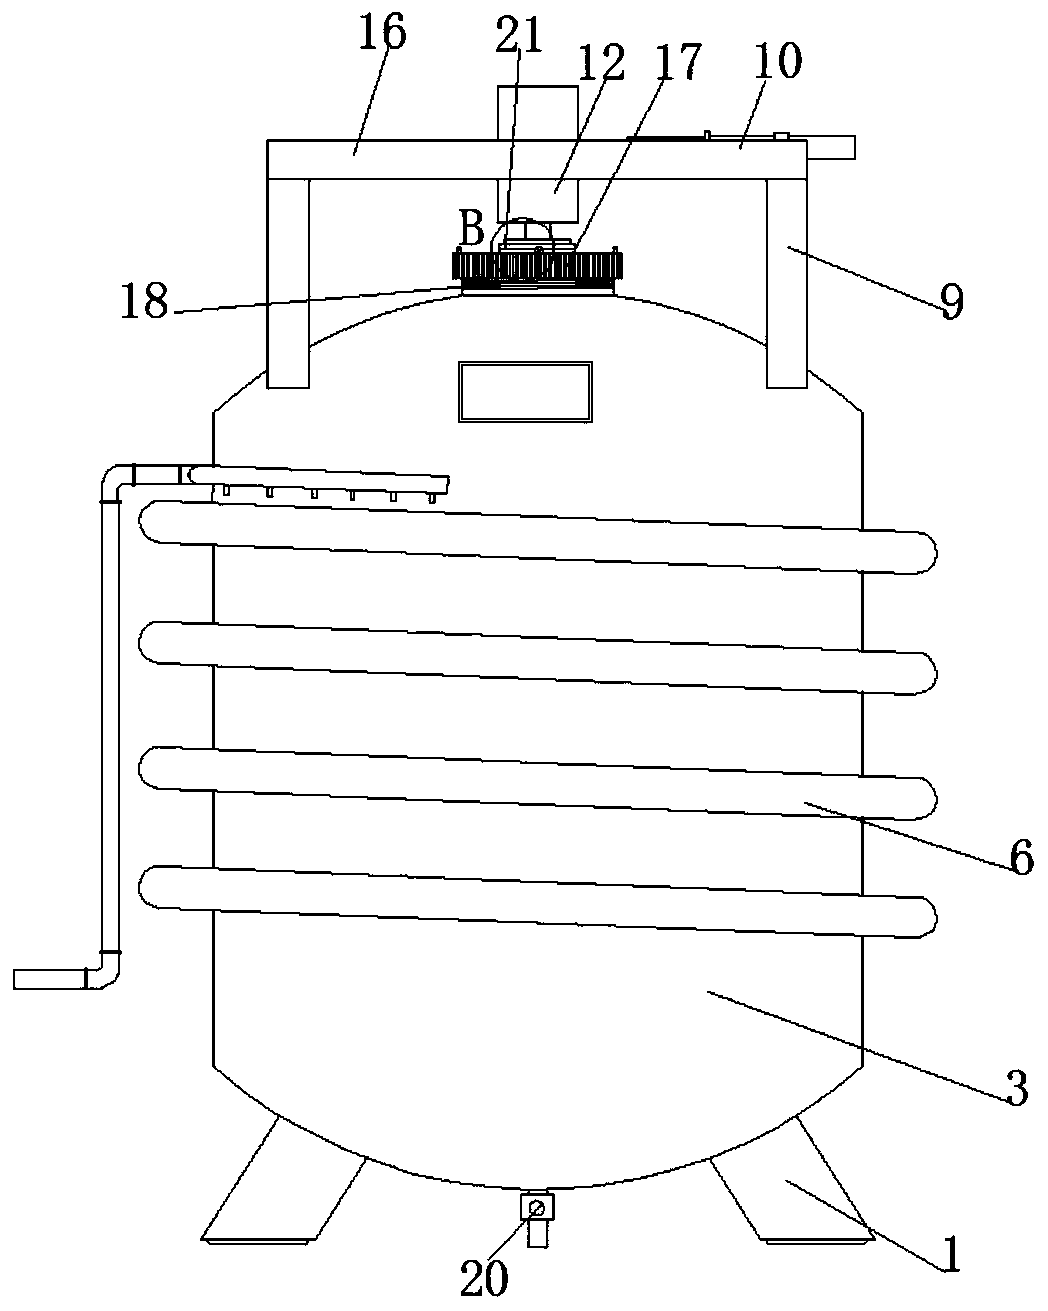 A pressure vessel for adjustable compression glass-lined equipment